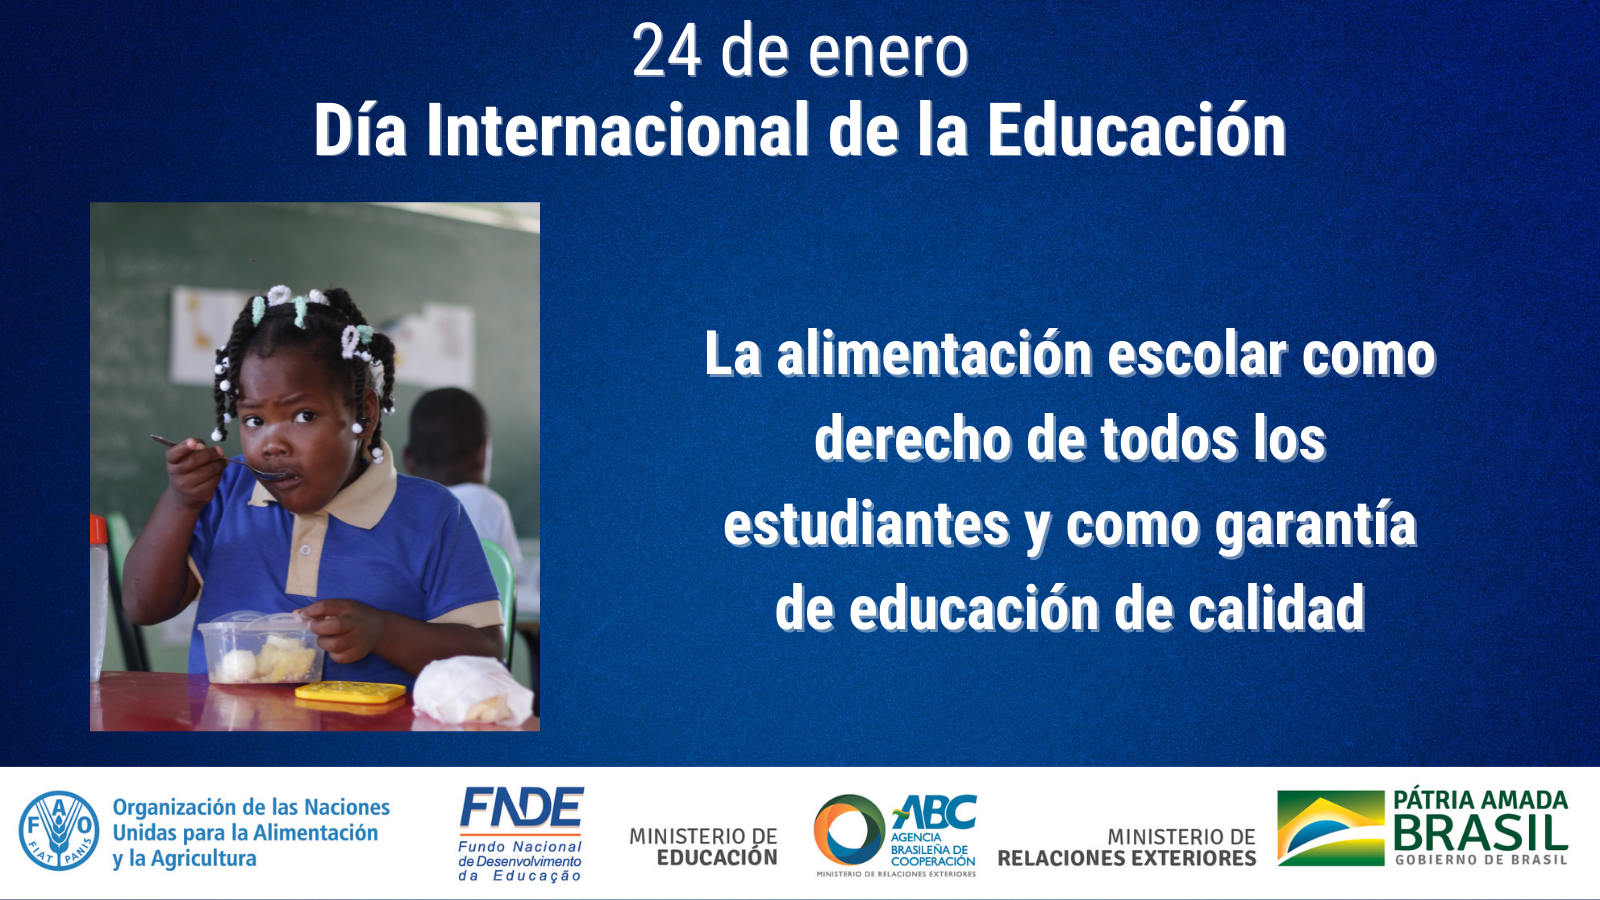 Dia Internacional de la Educacion